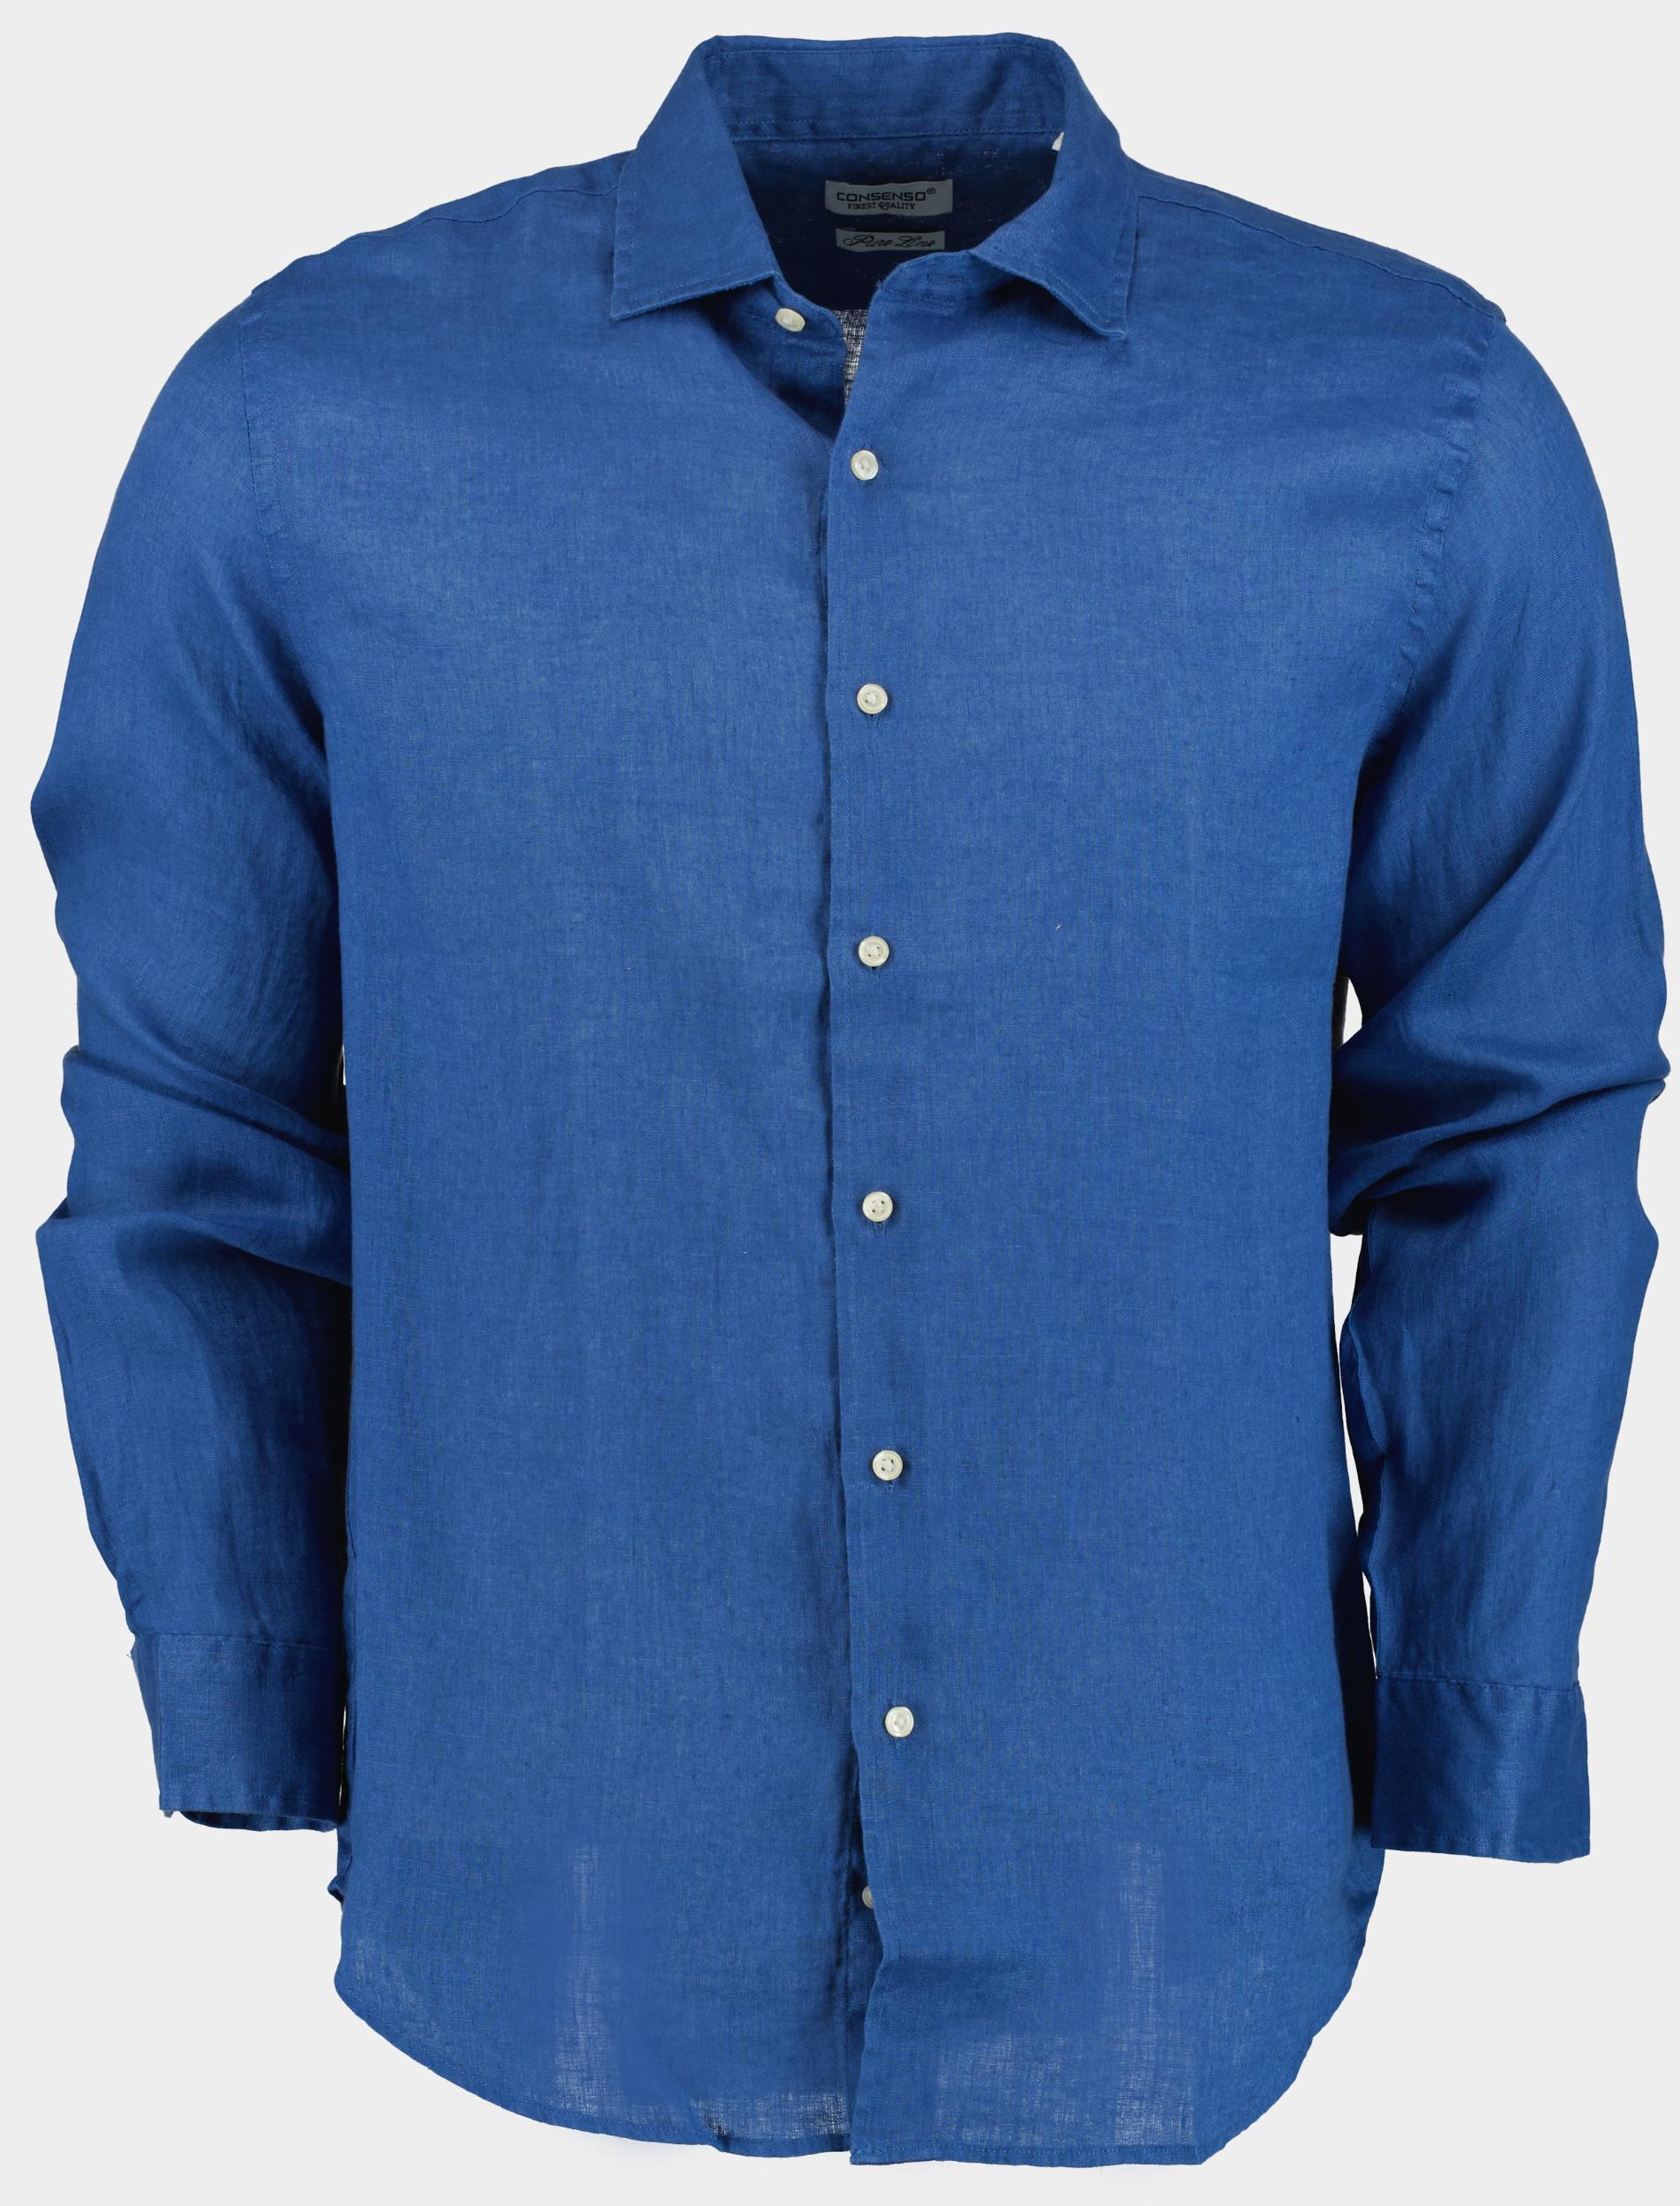 Consenso Casual hemd lange mouw Blauw Camicia 9432900/293